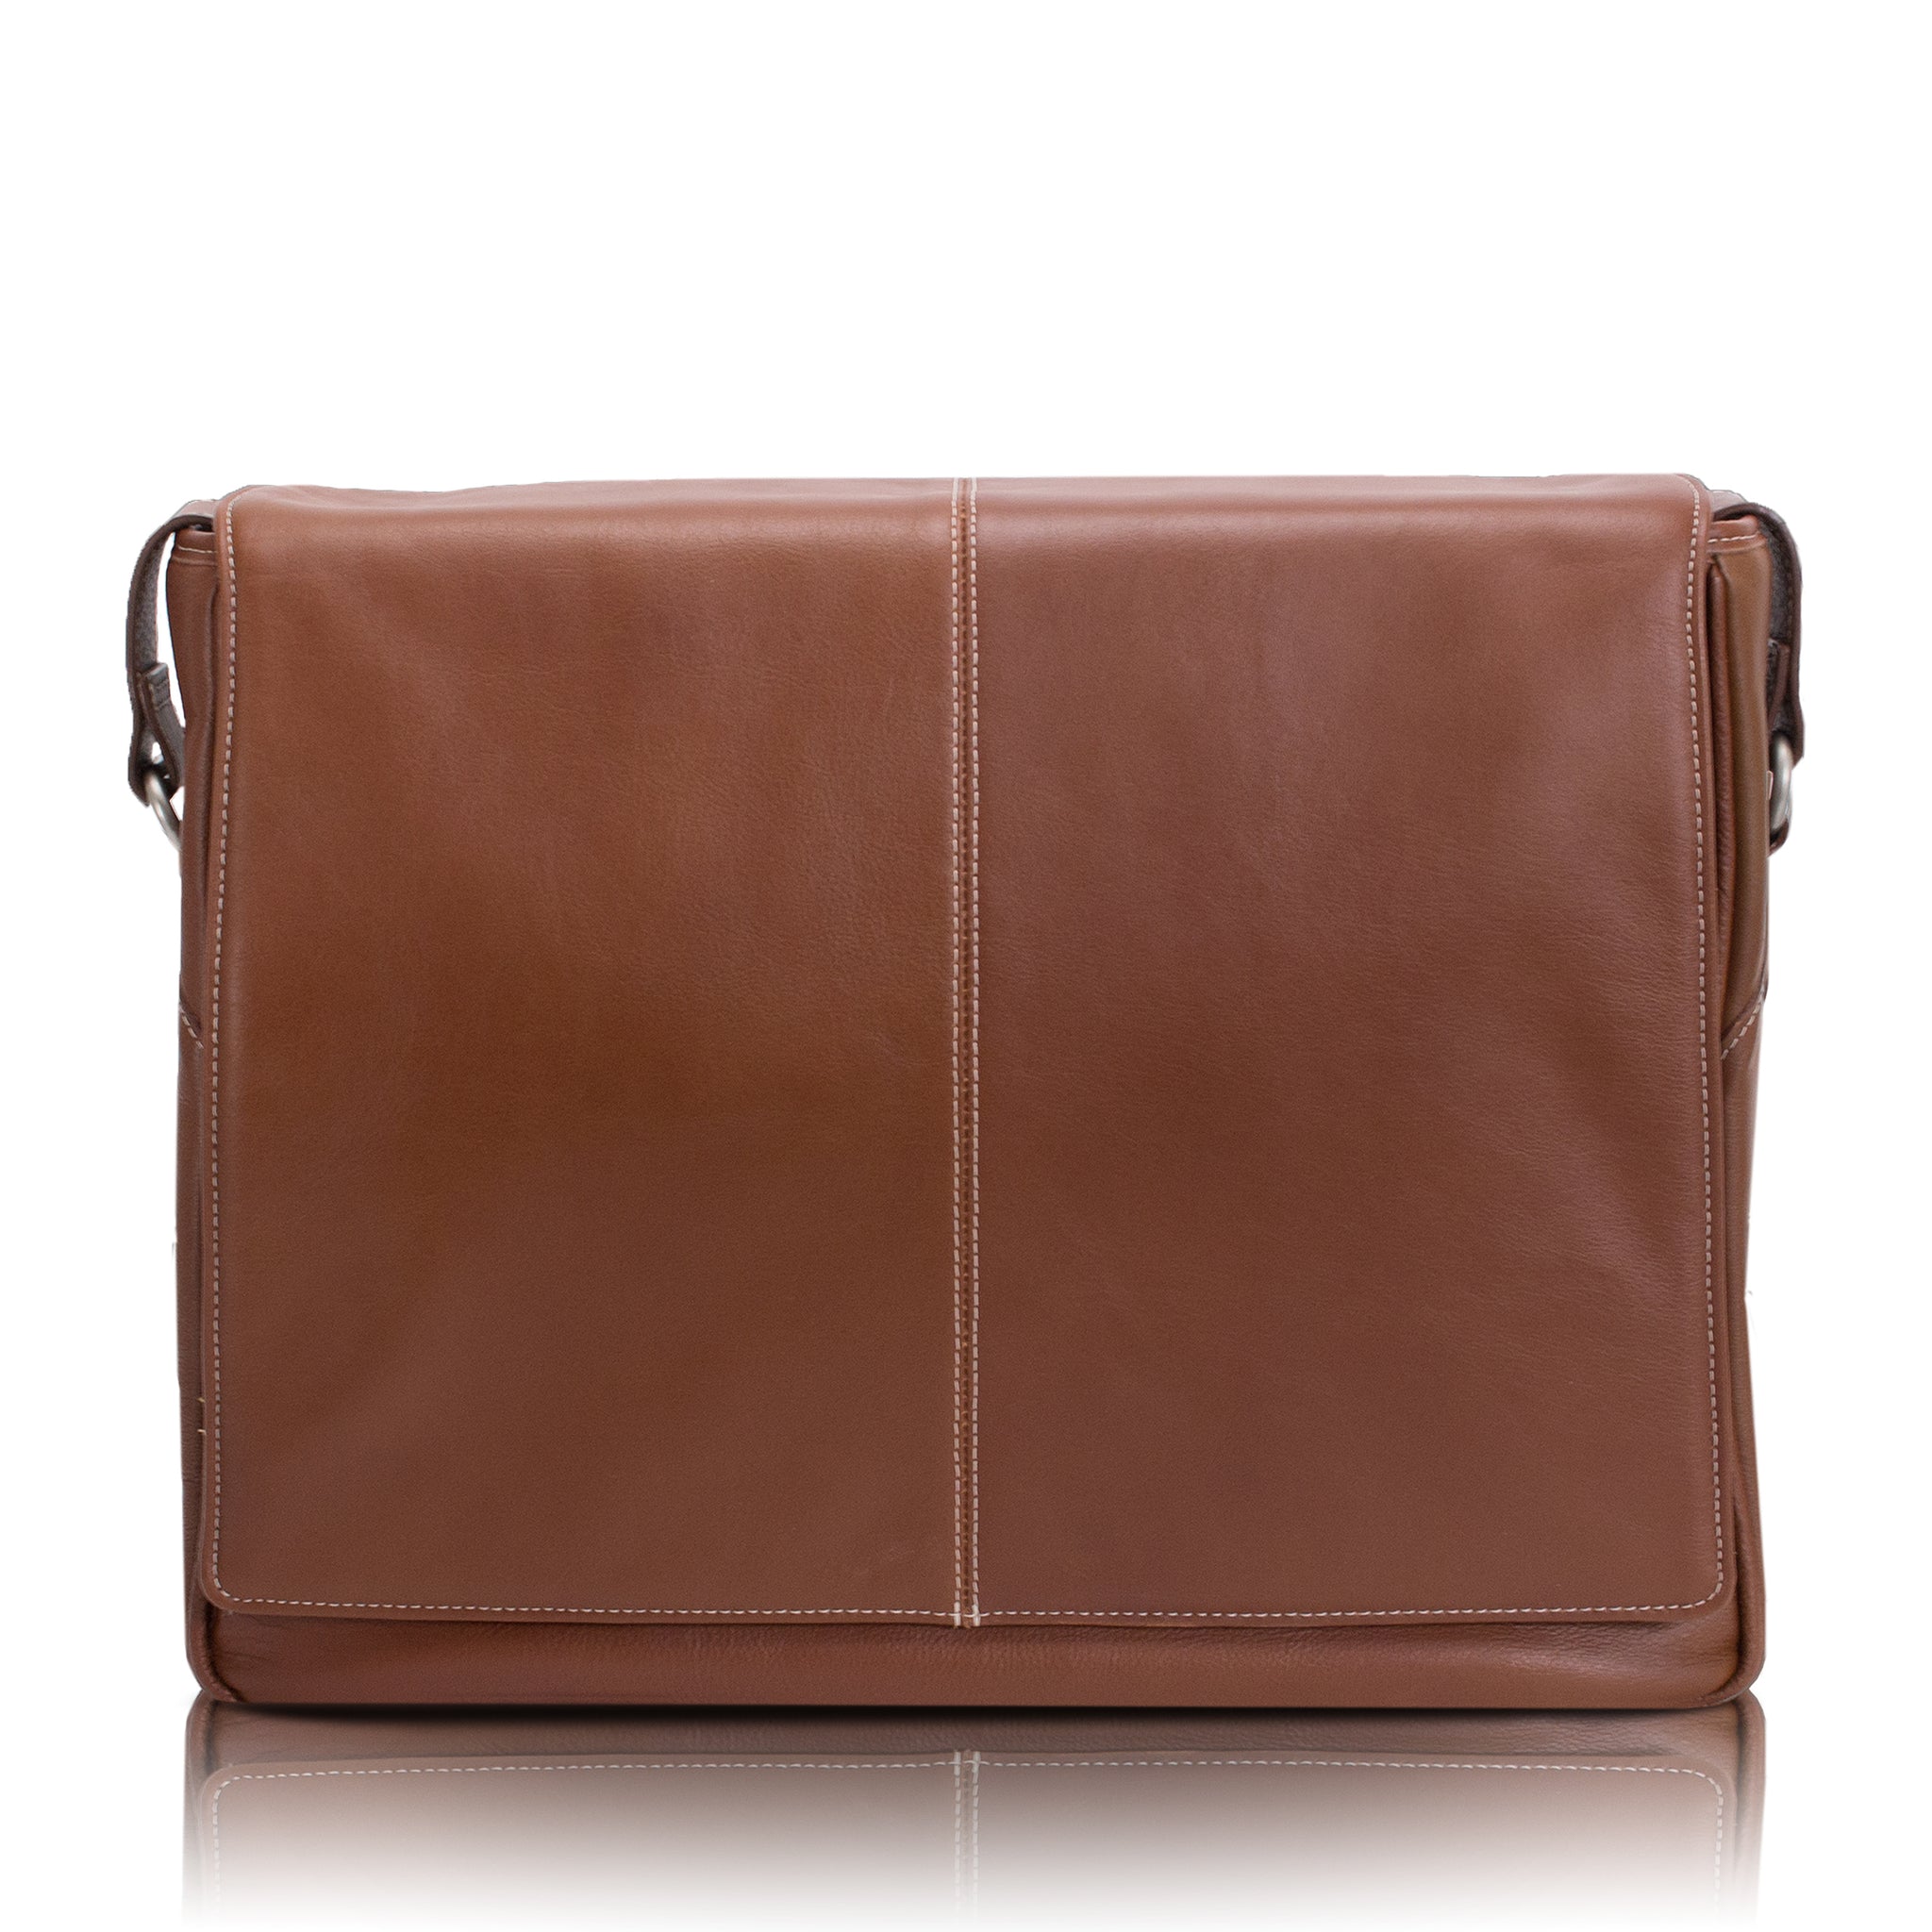 Siamod SAN FRANCESCO 13" Leather Messenger Bag